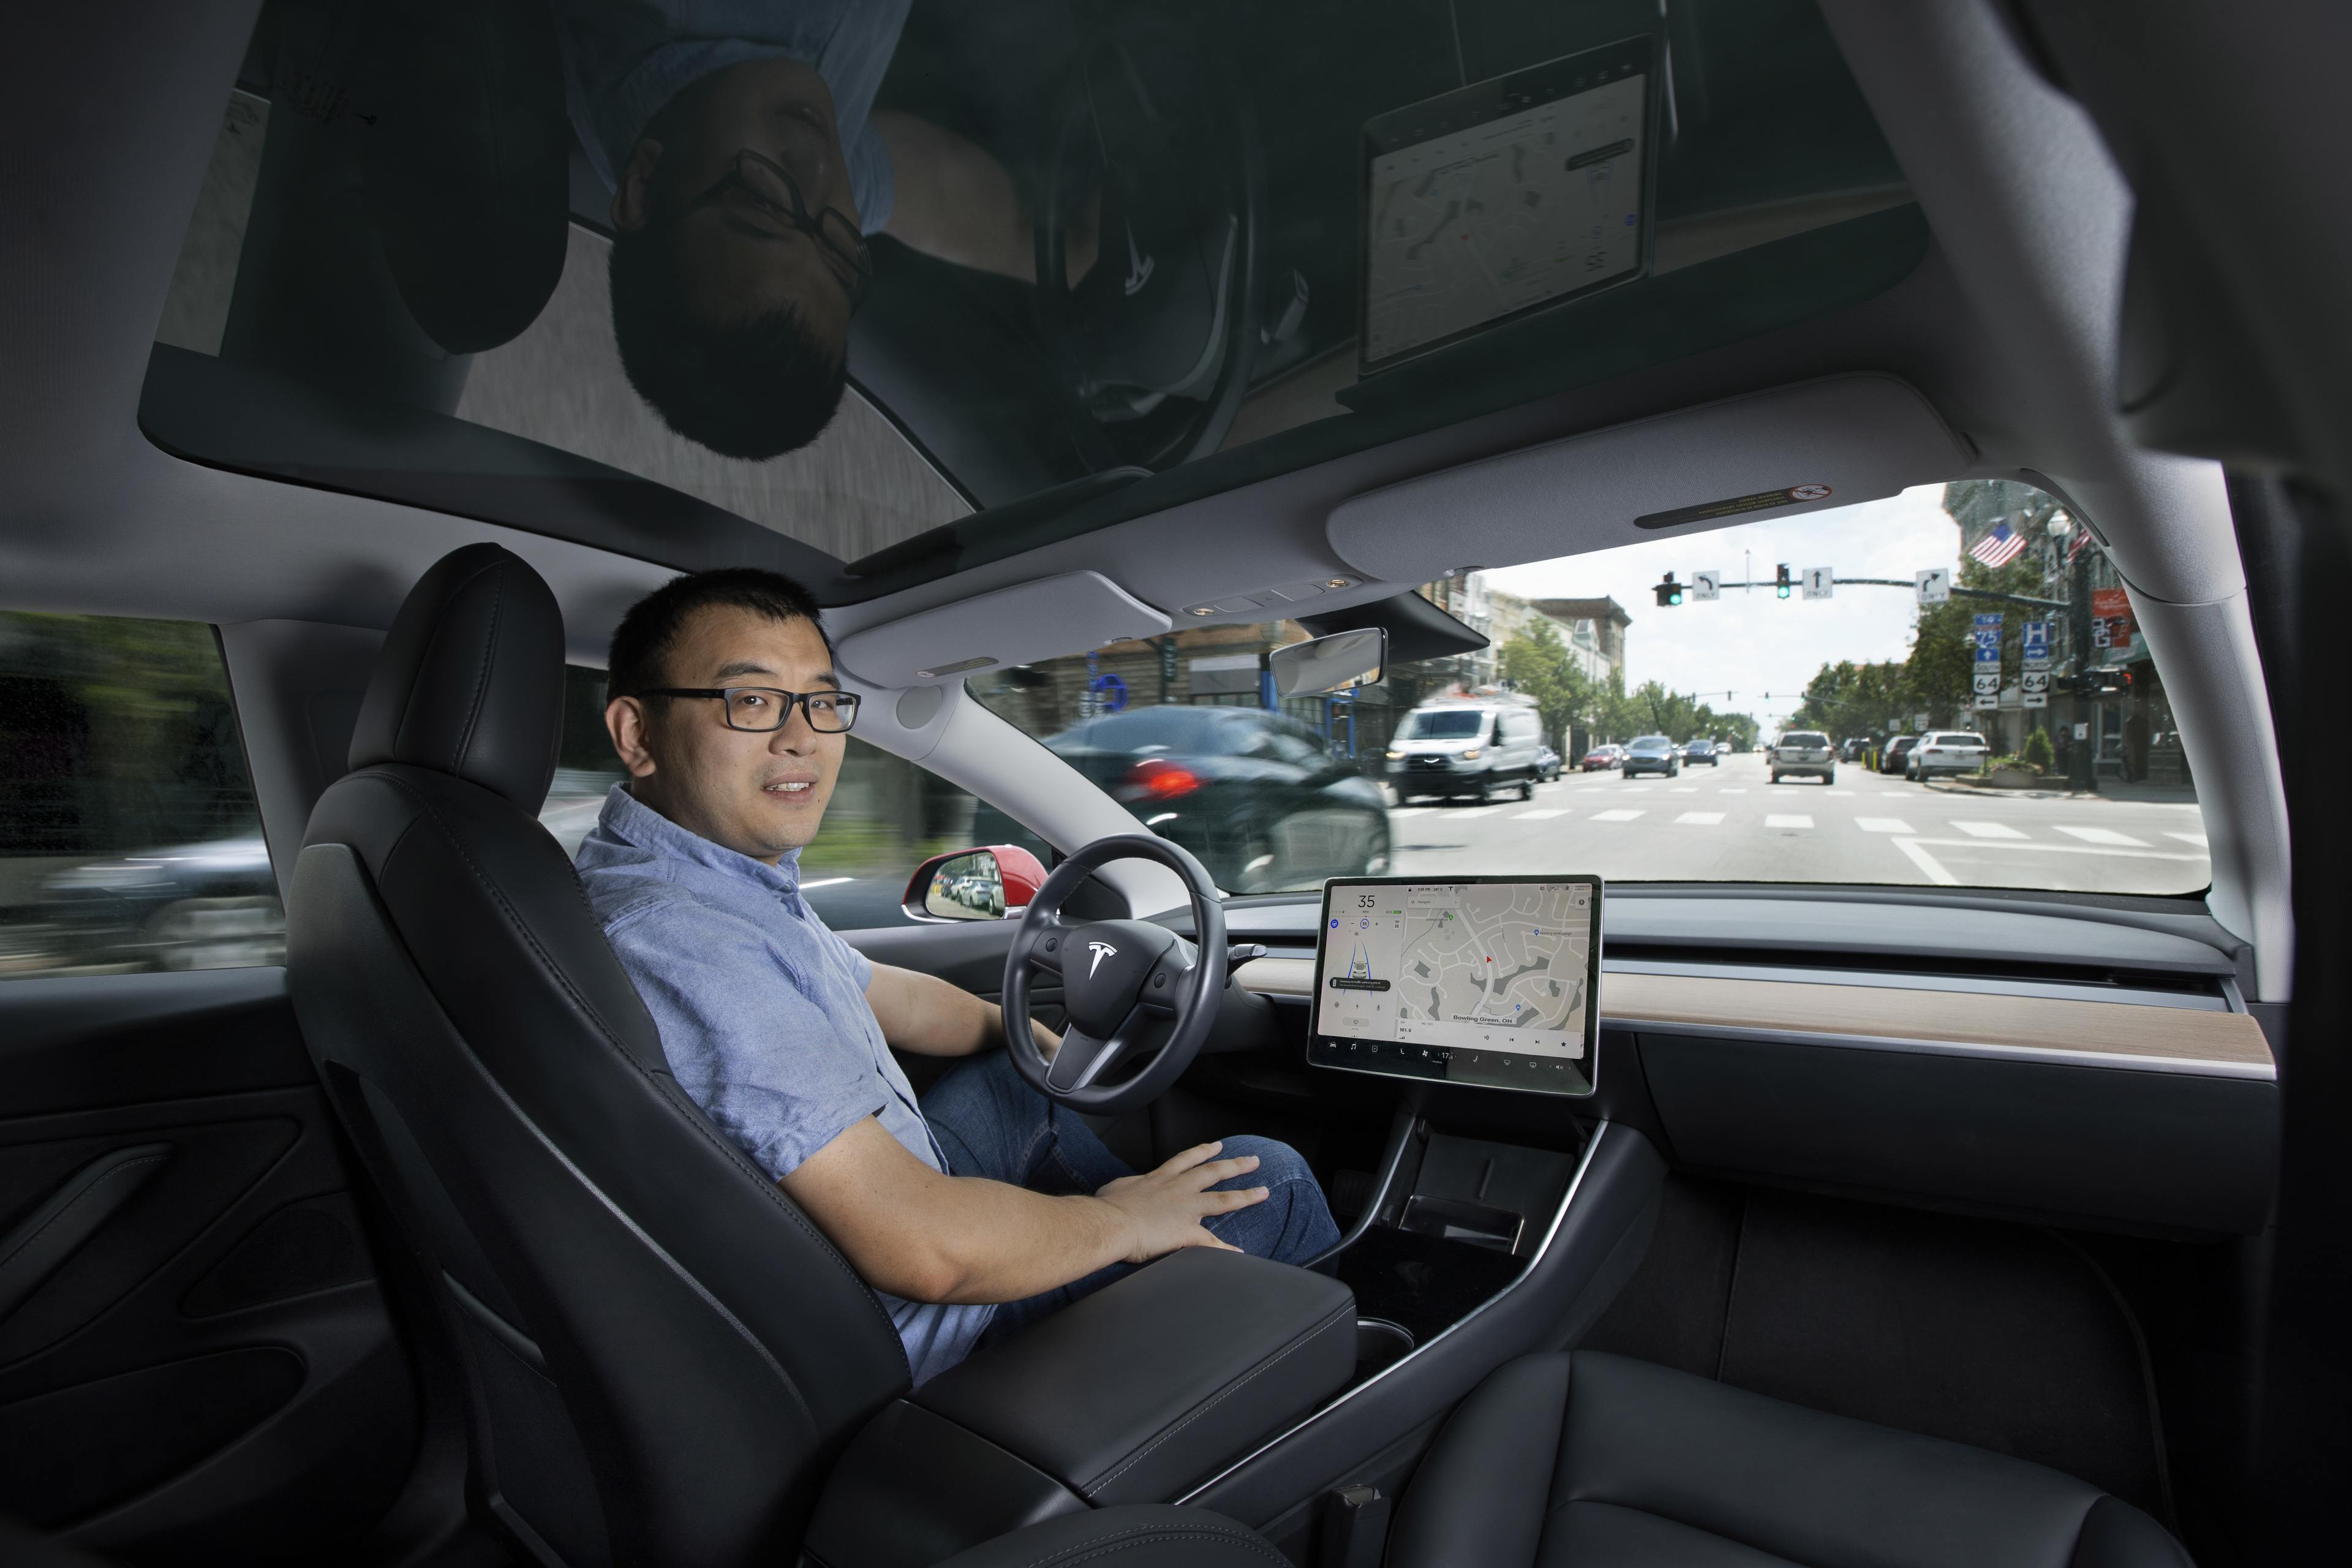 Dr. Qing Tian self-driving vehicles